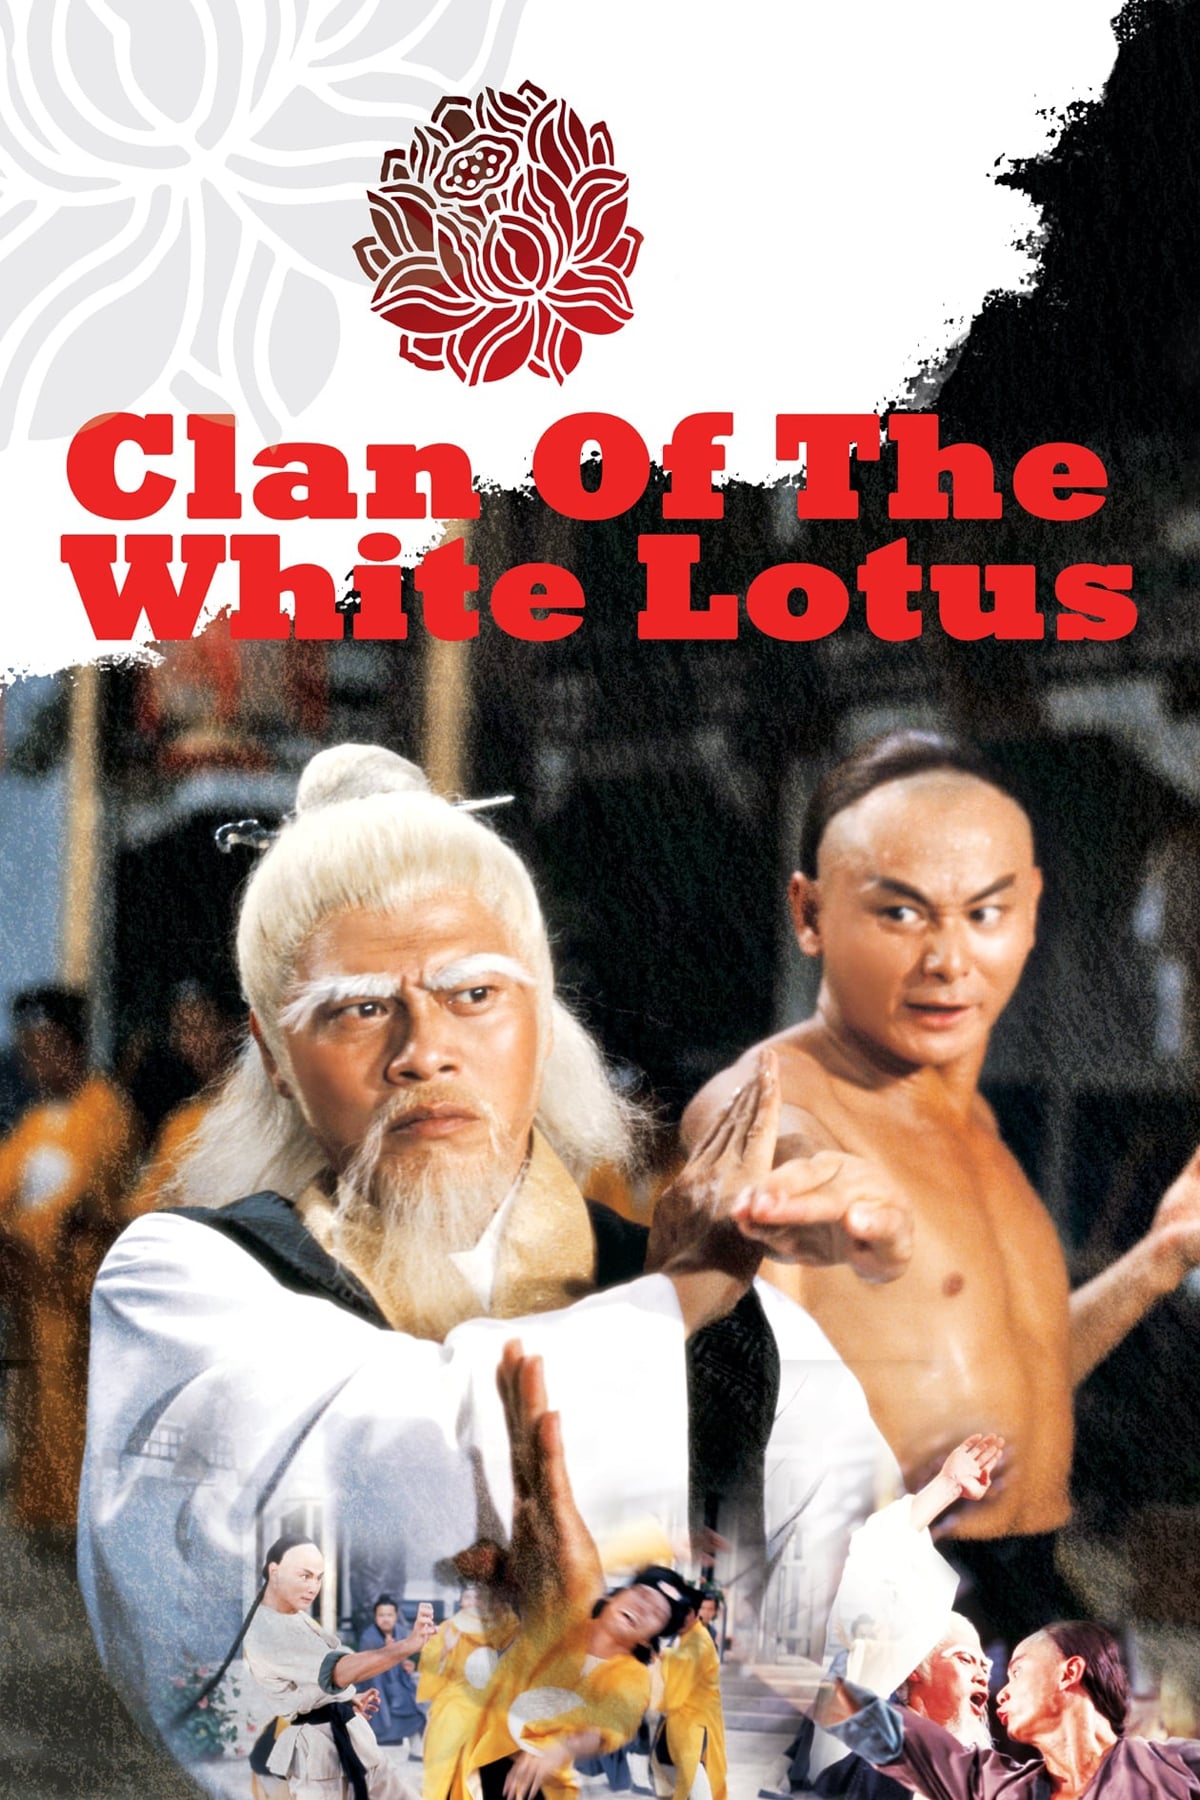 Clan of the White Lotus (1980)